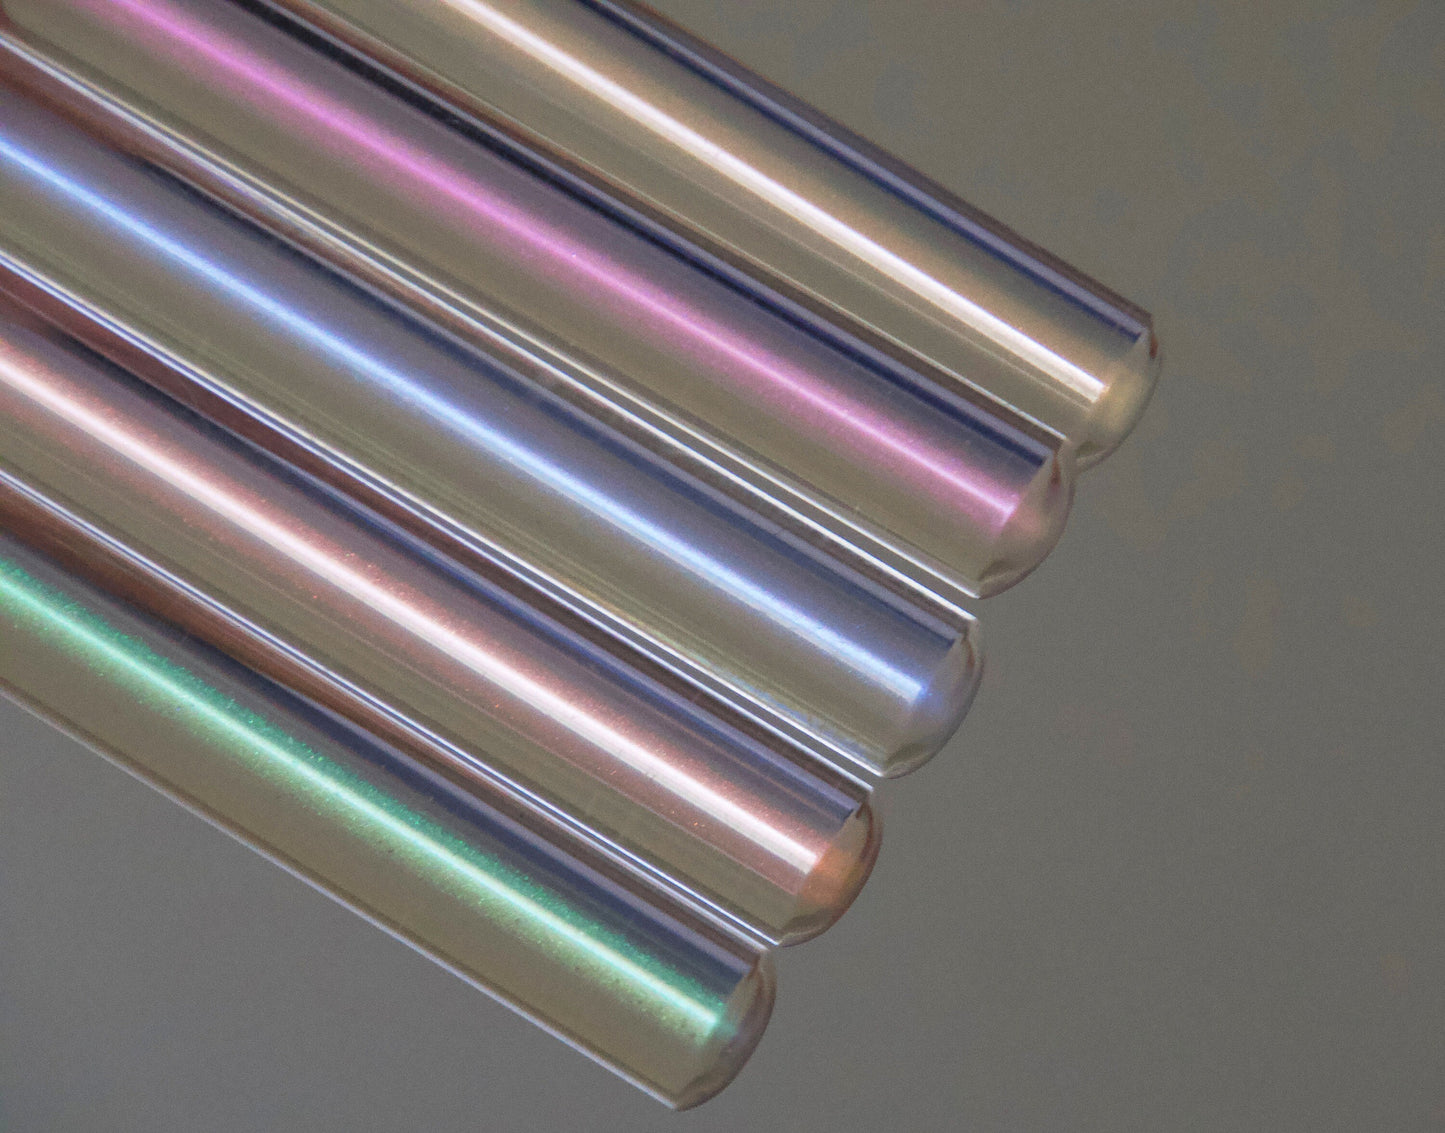 5pcs Polar Light Handle Nail Brush Set/ Detailing Striping Gel Liner Brushes, Painting Brushes, 3D Brush, Ombre Brush, With Pink Case